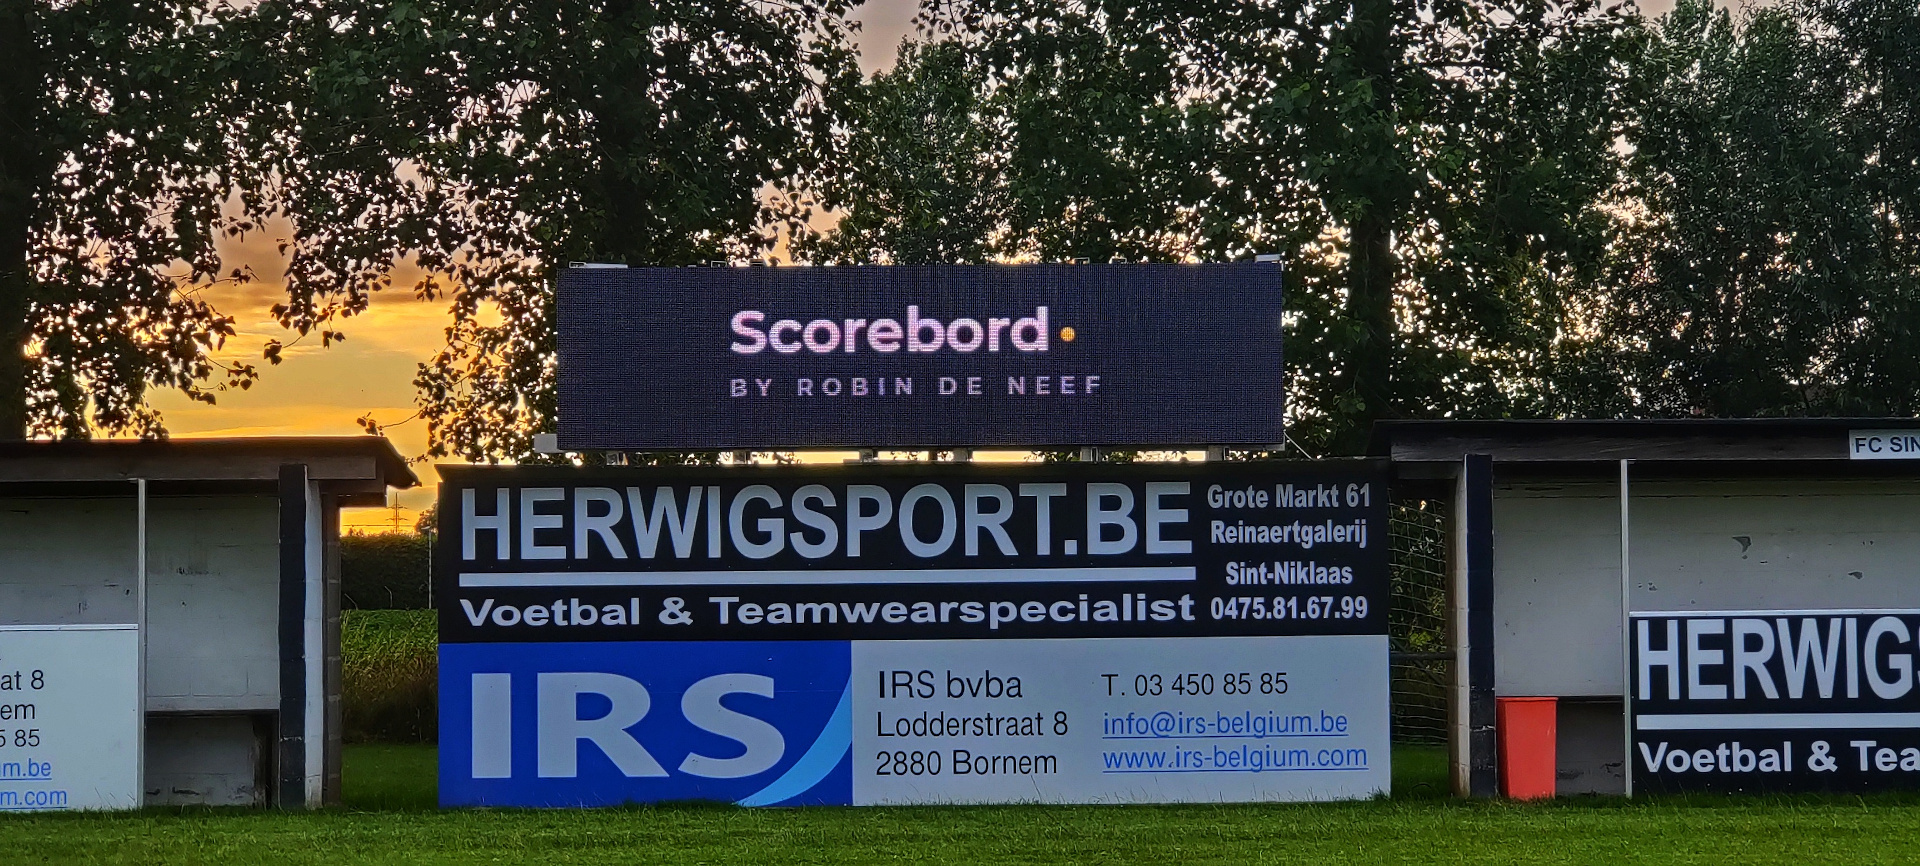 Scoreboard deployed in the real world.